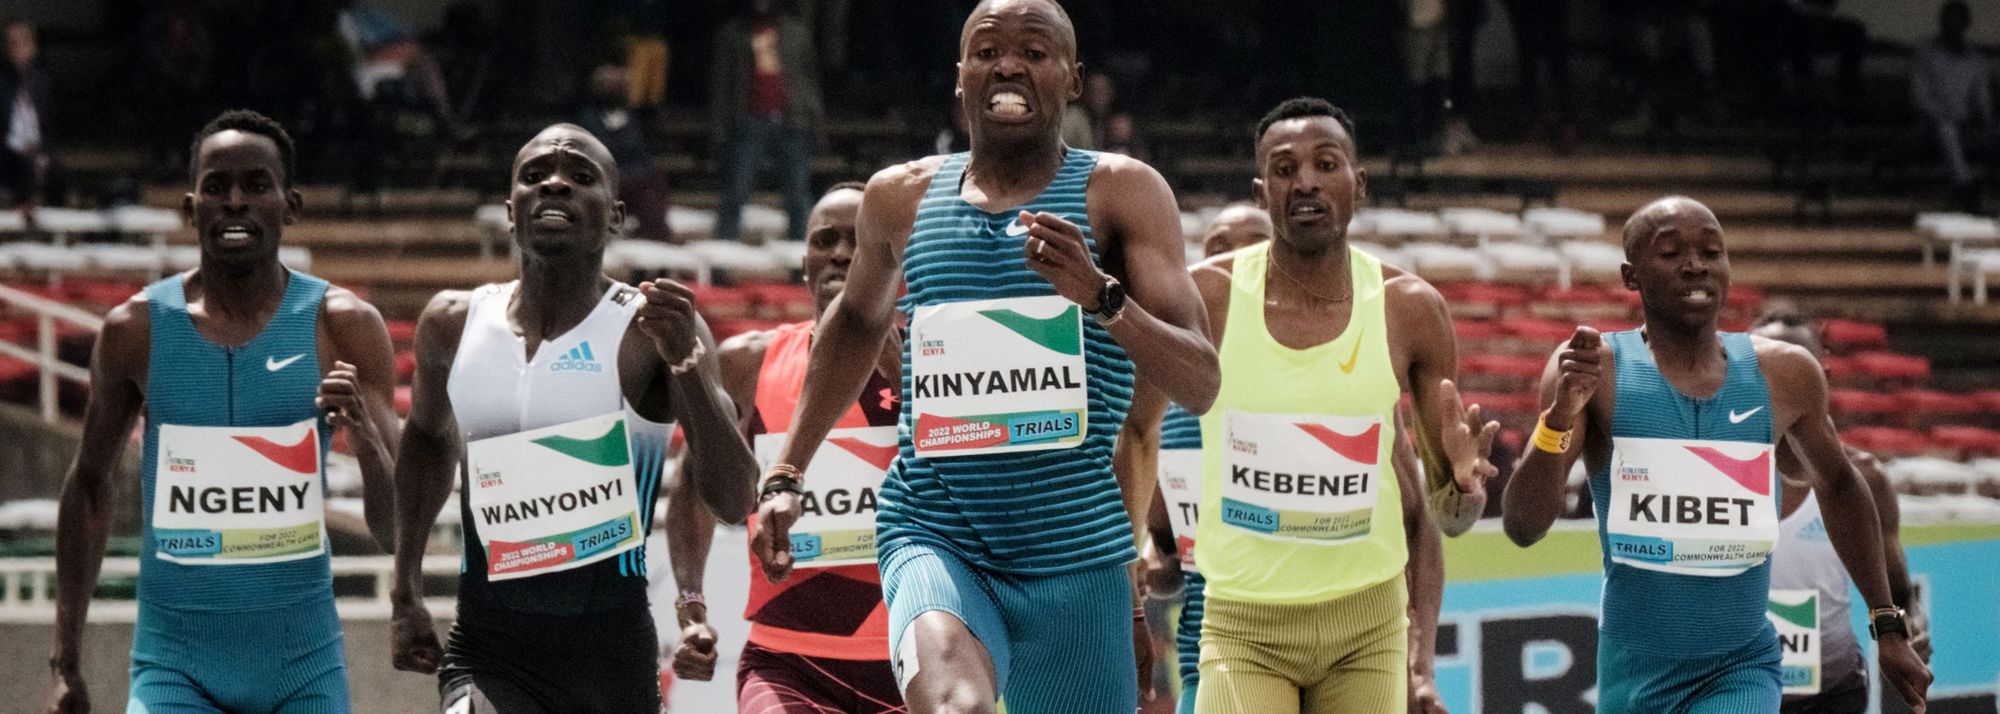 Kinyamal clocks 1:43.55, Moraa breaks Kenyan 400m record